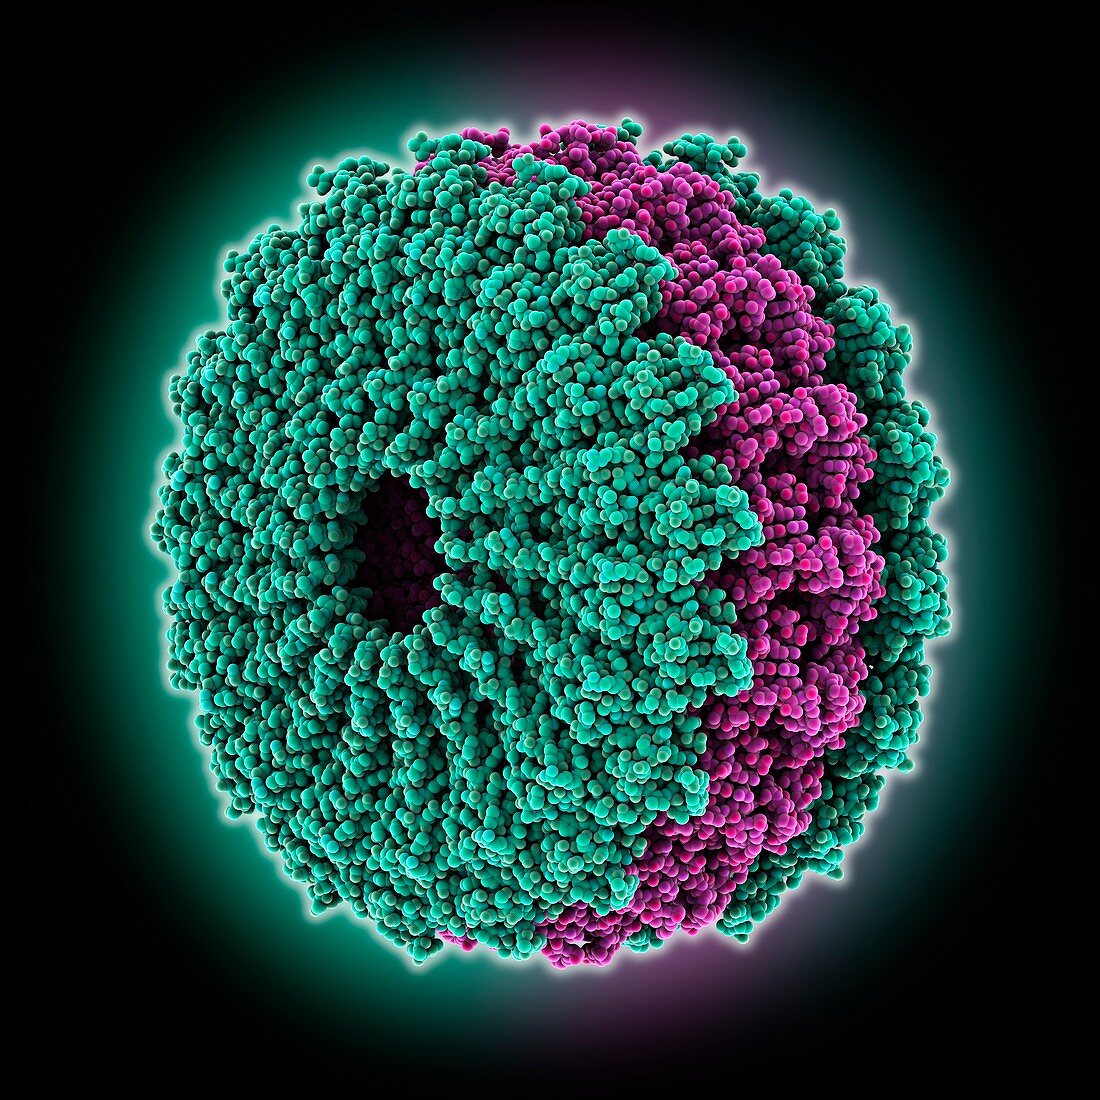 Tobacco mosaic virus coat protein